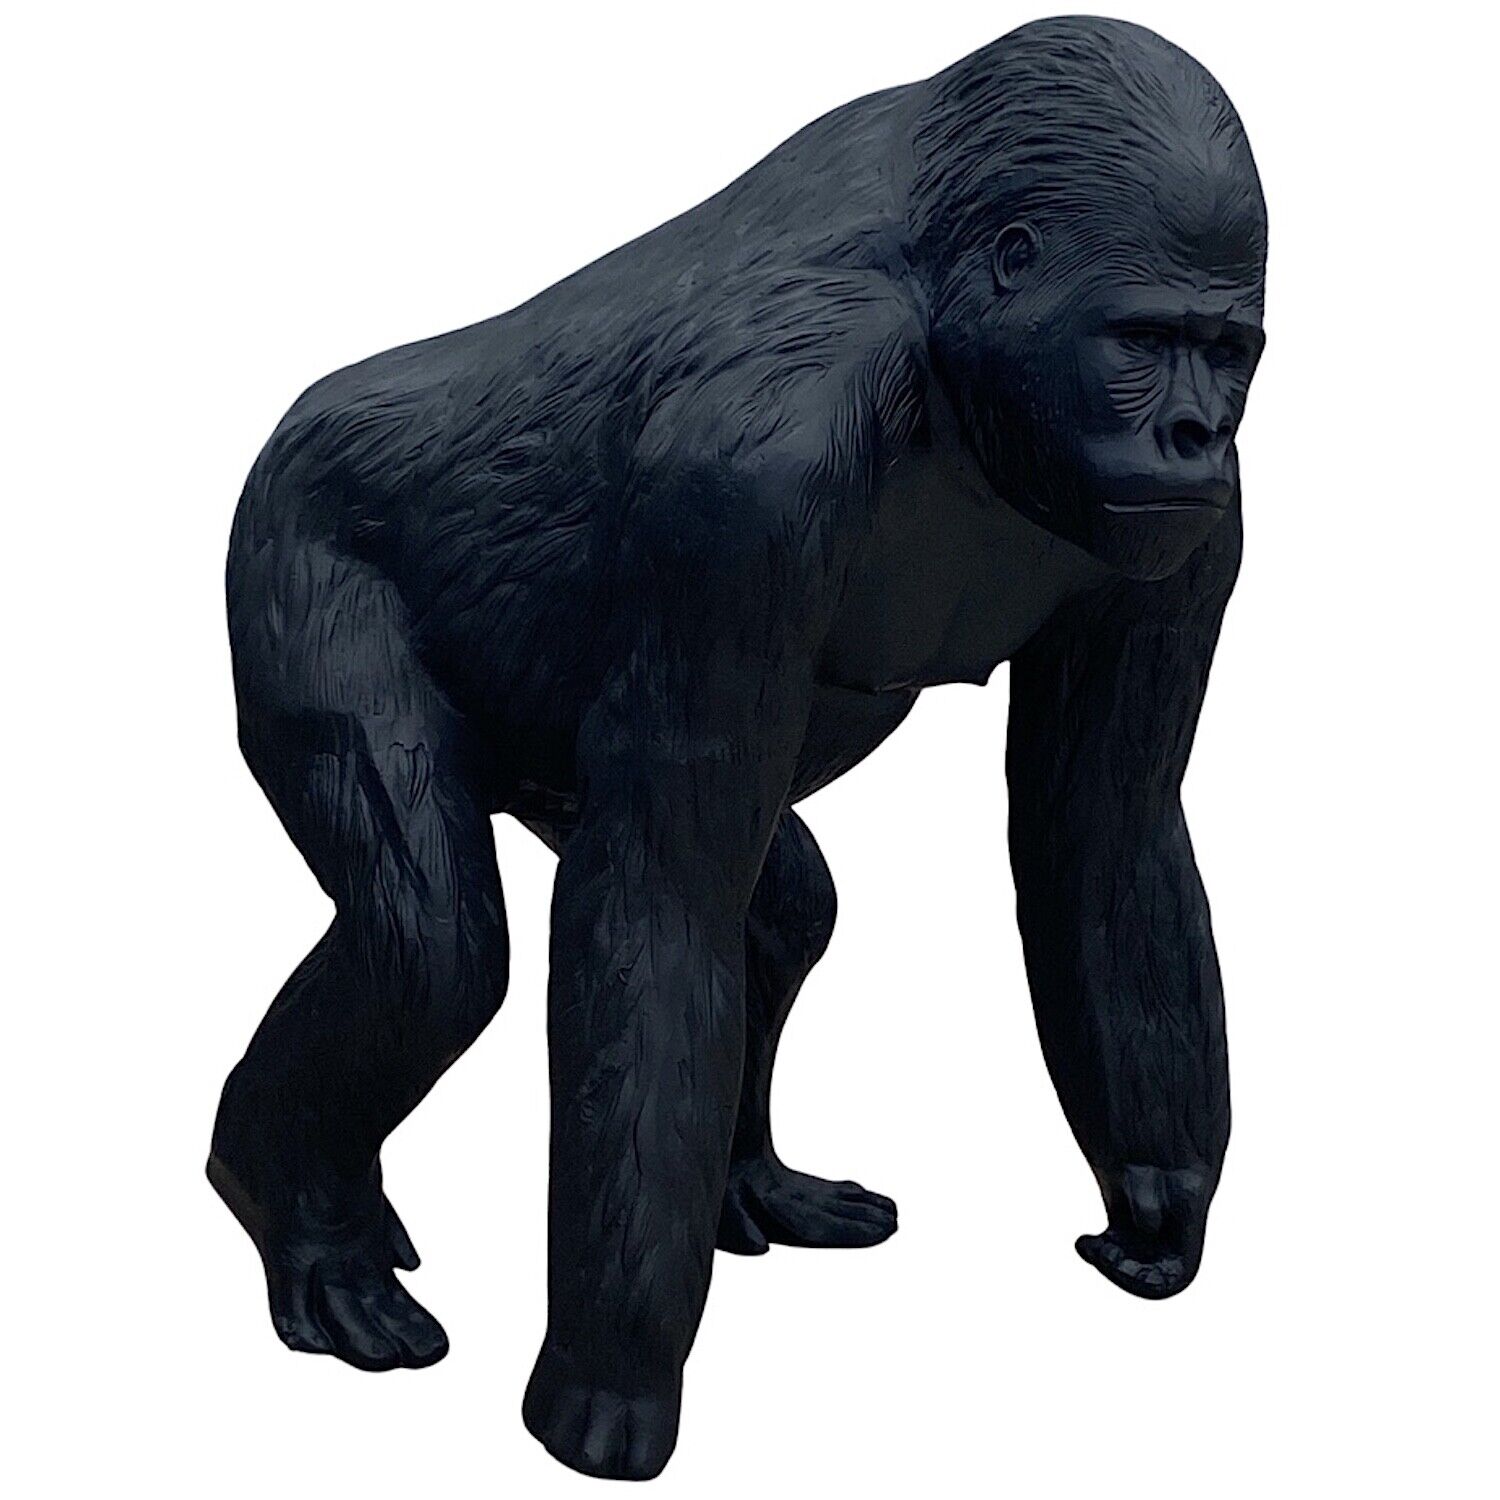 Life Size Gorilla Ape Statue in Non Rust Aluminum for Indoor or Outdoor Use